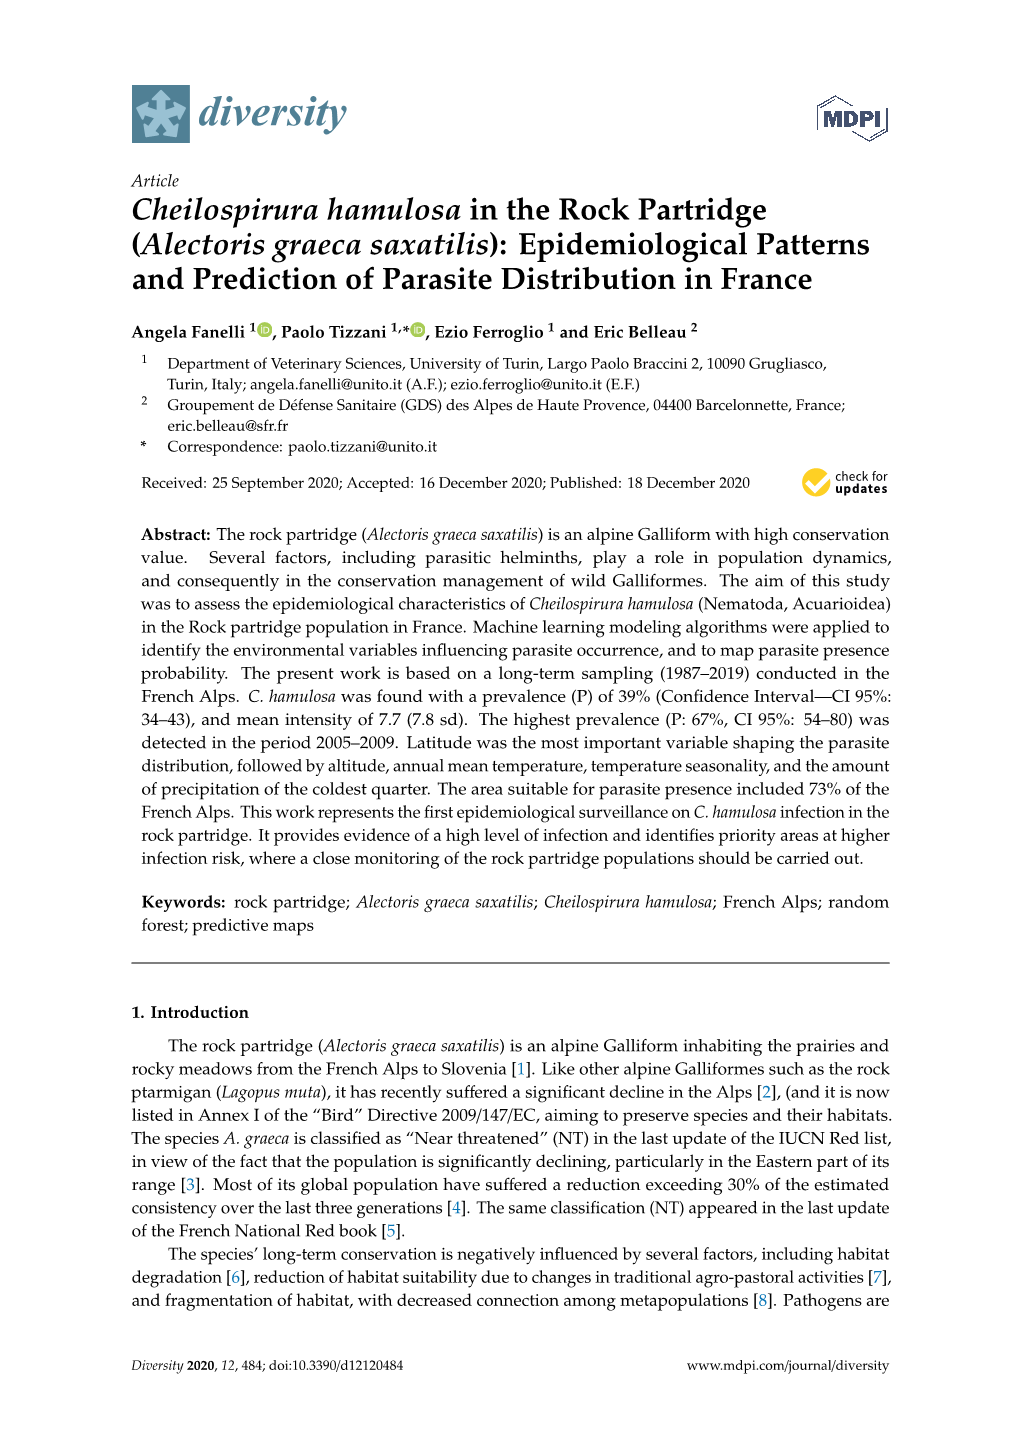 Cheilospirura Hamulosa in the Rock Partridge (Alectoris Graeca Saxatilis): Epidemiological Patterns and Prediction of Parasite Distribution in France